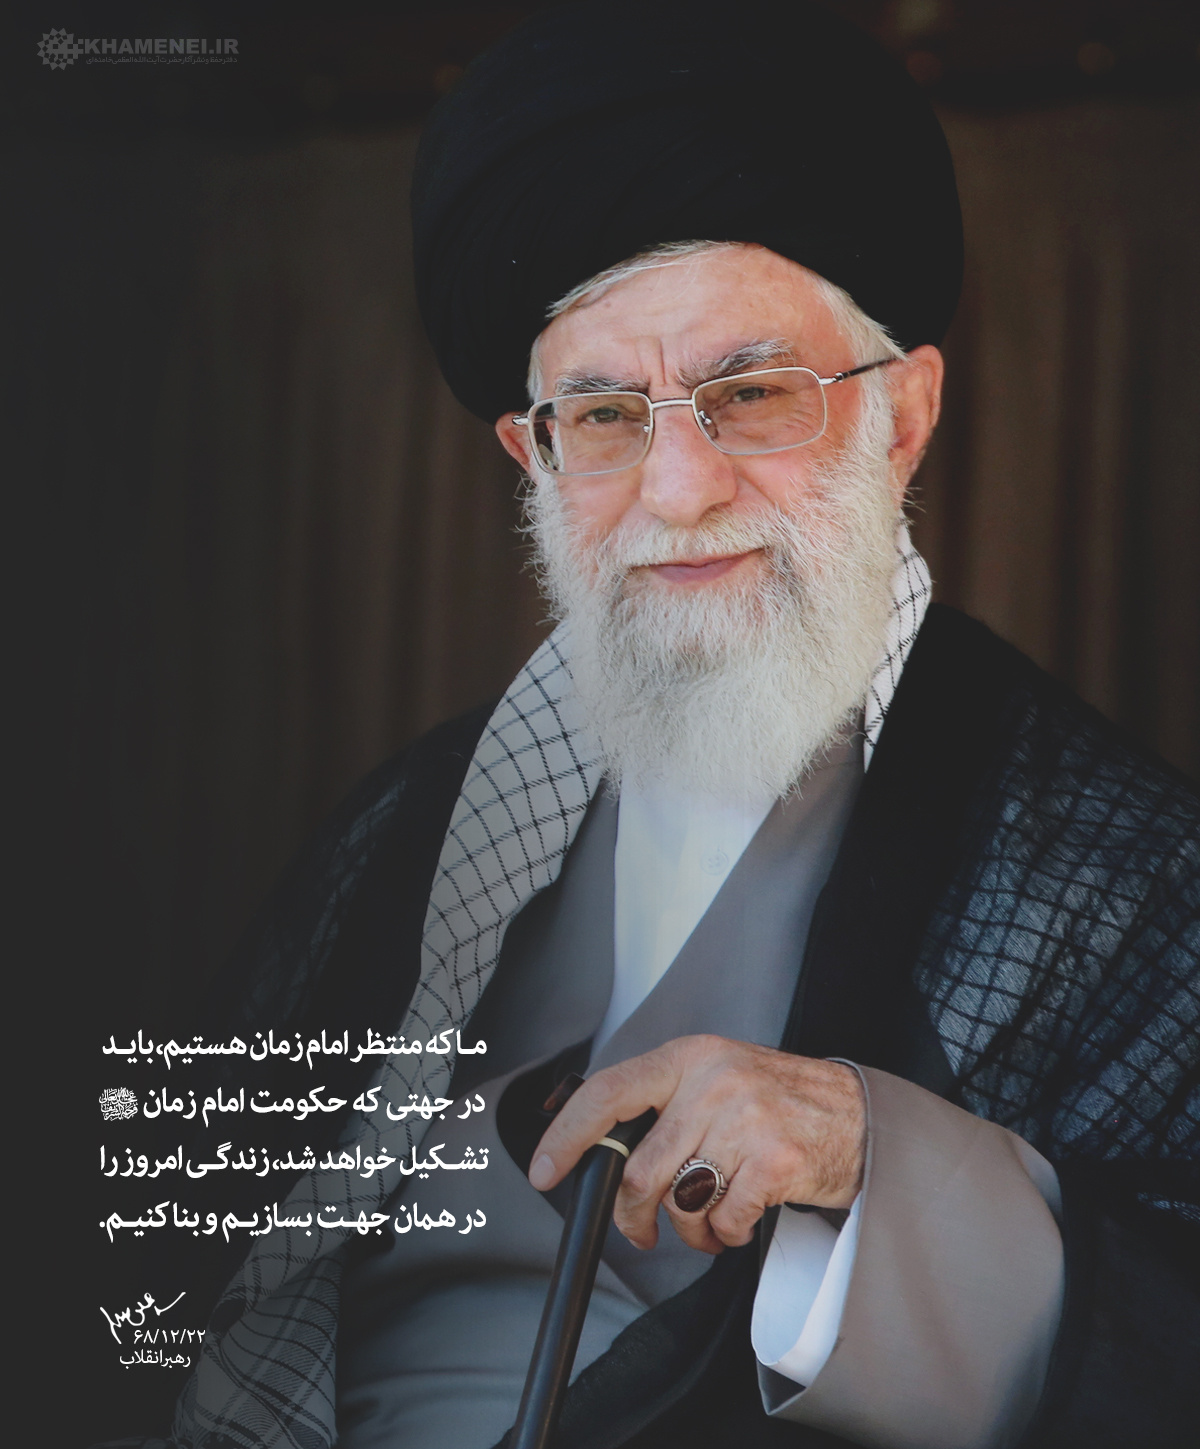 http://idc0-cdn0.khamenei.ir/ndata/news/34597/B/13950402_0534597.jpg